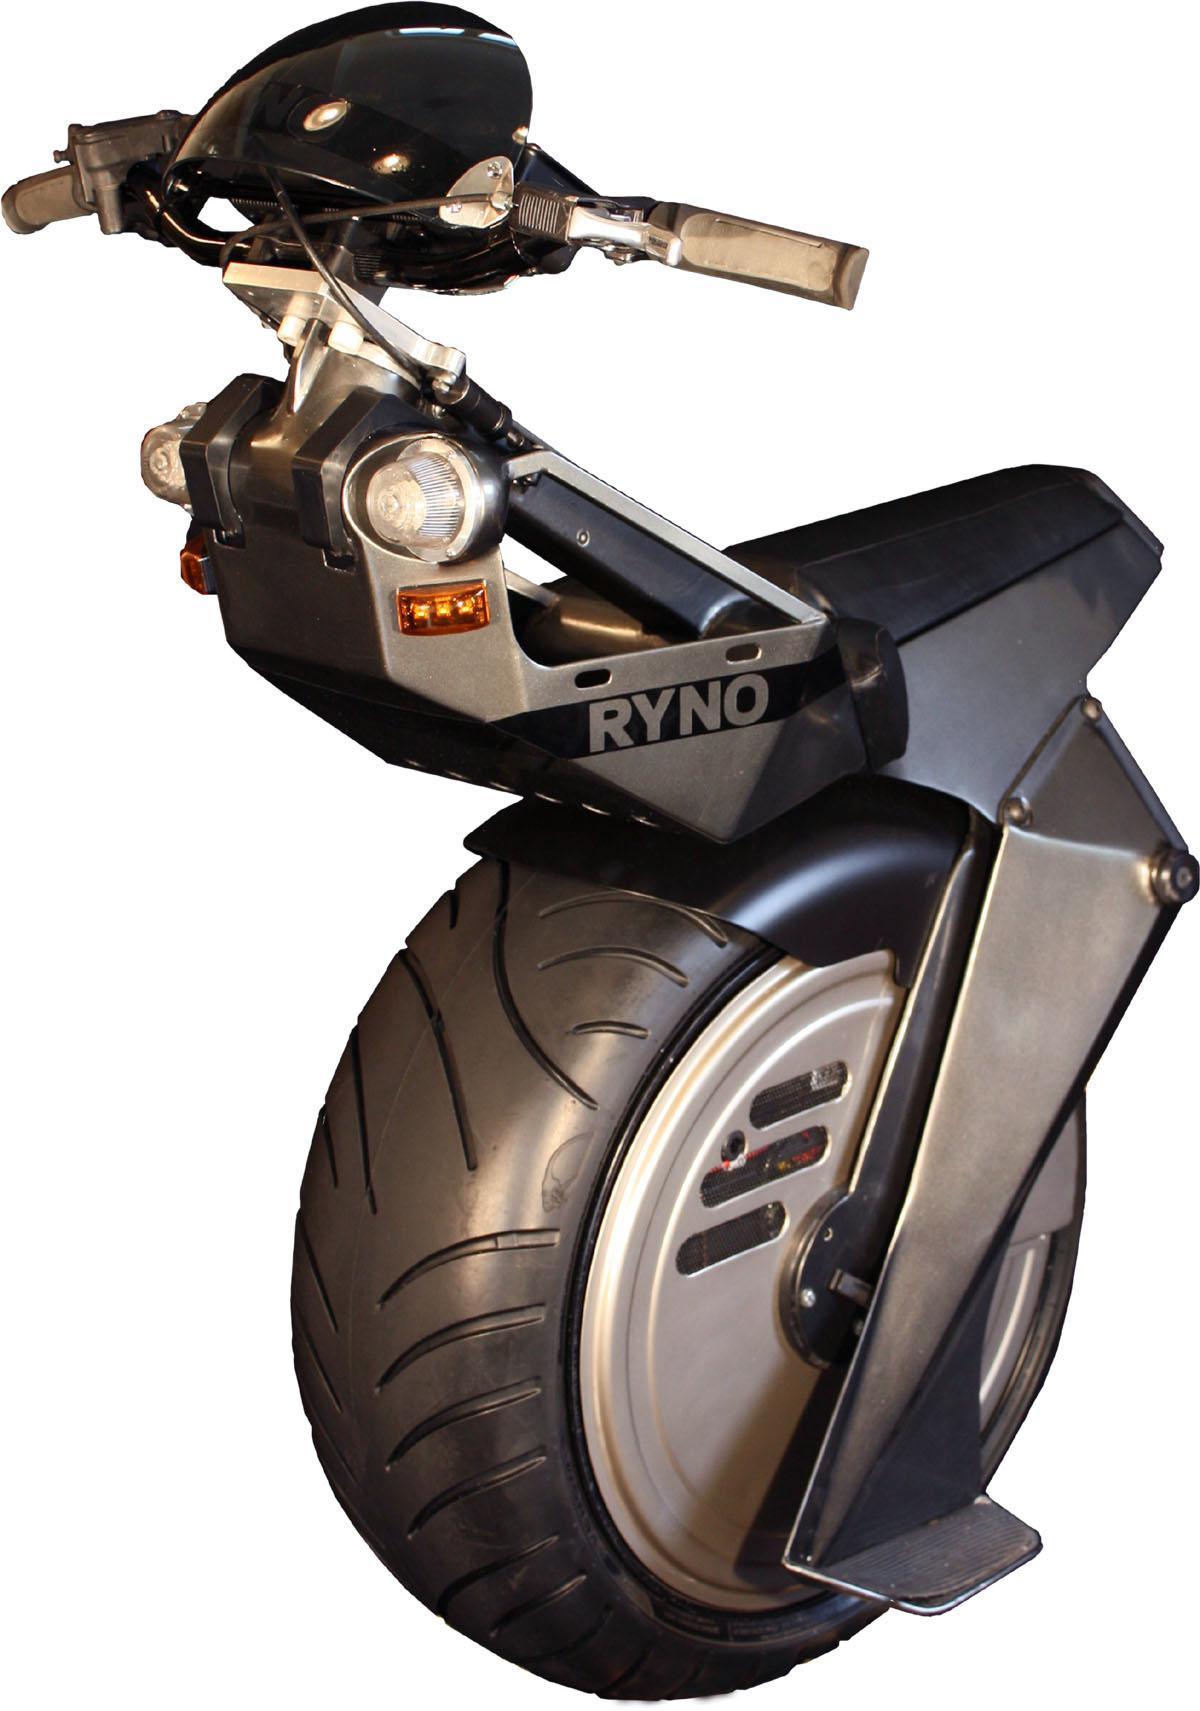 Jérôme » Ryno motors selfbalancing, one wheel, electric